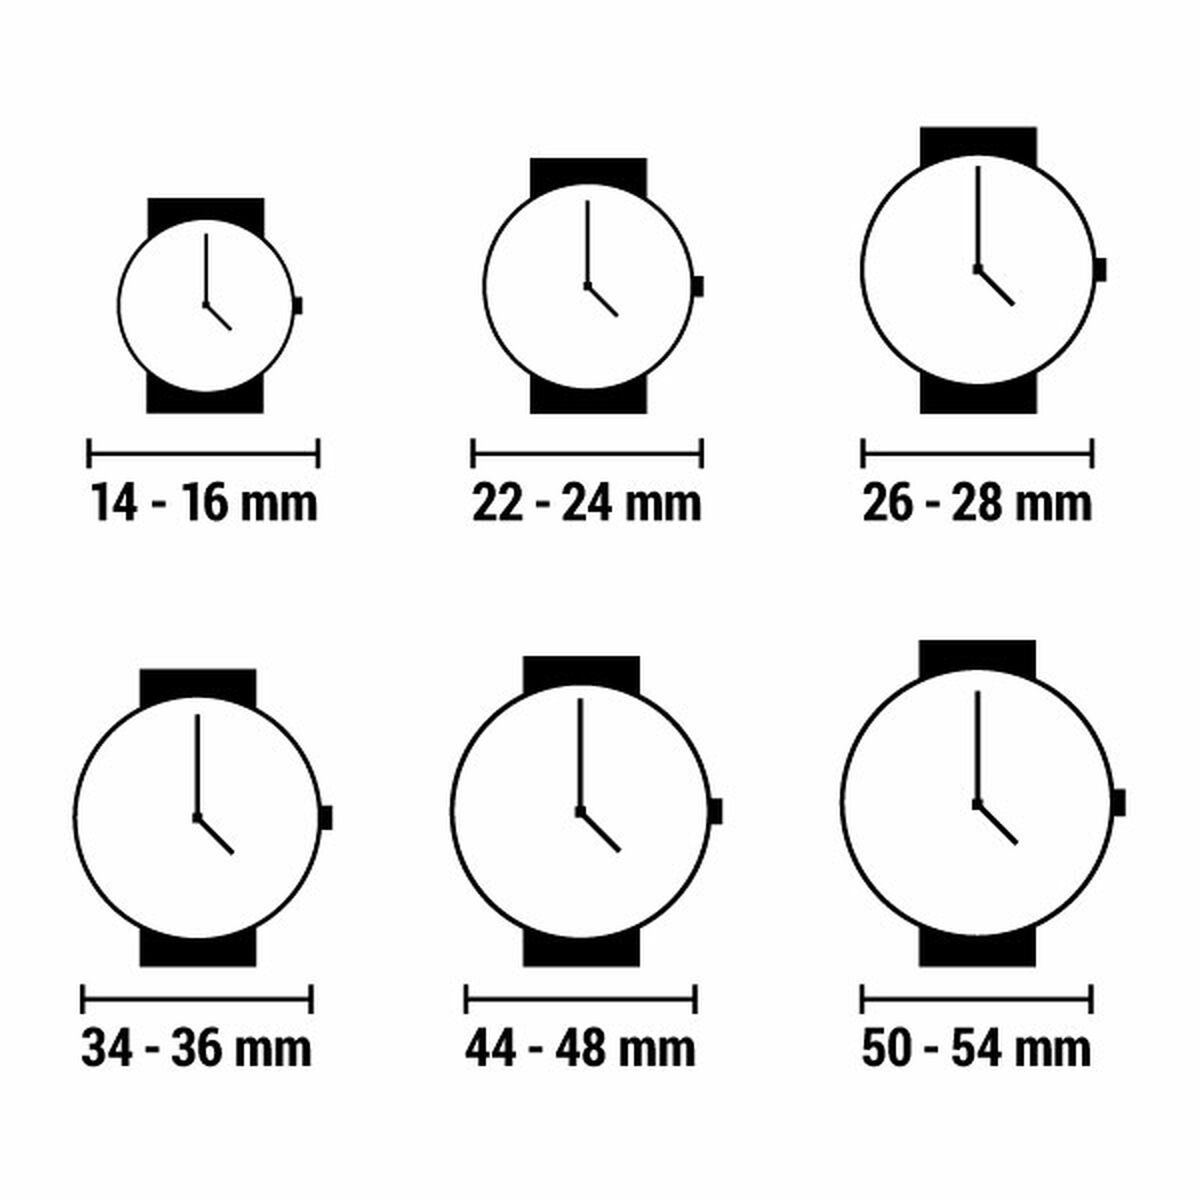 Horloge Dames Mark Maddox MM7119-37 (Ø 37 mm)